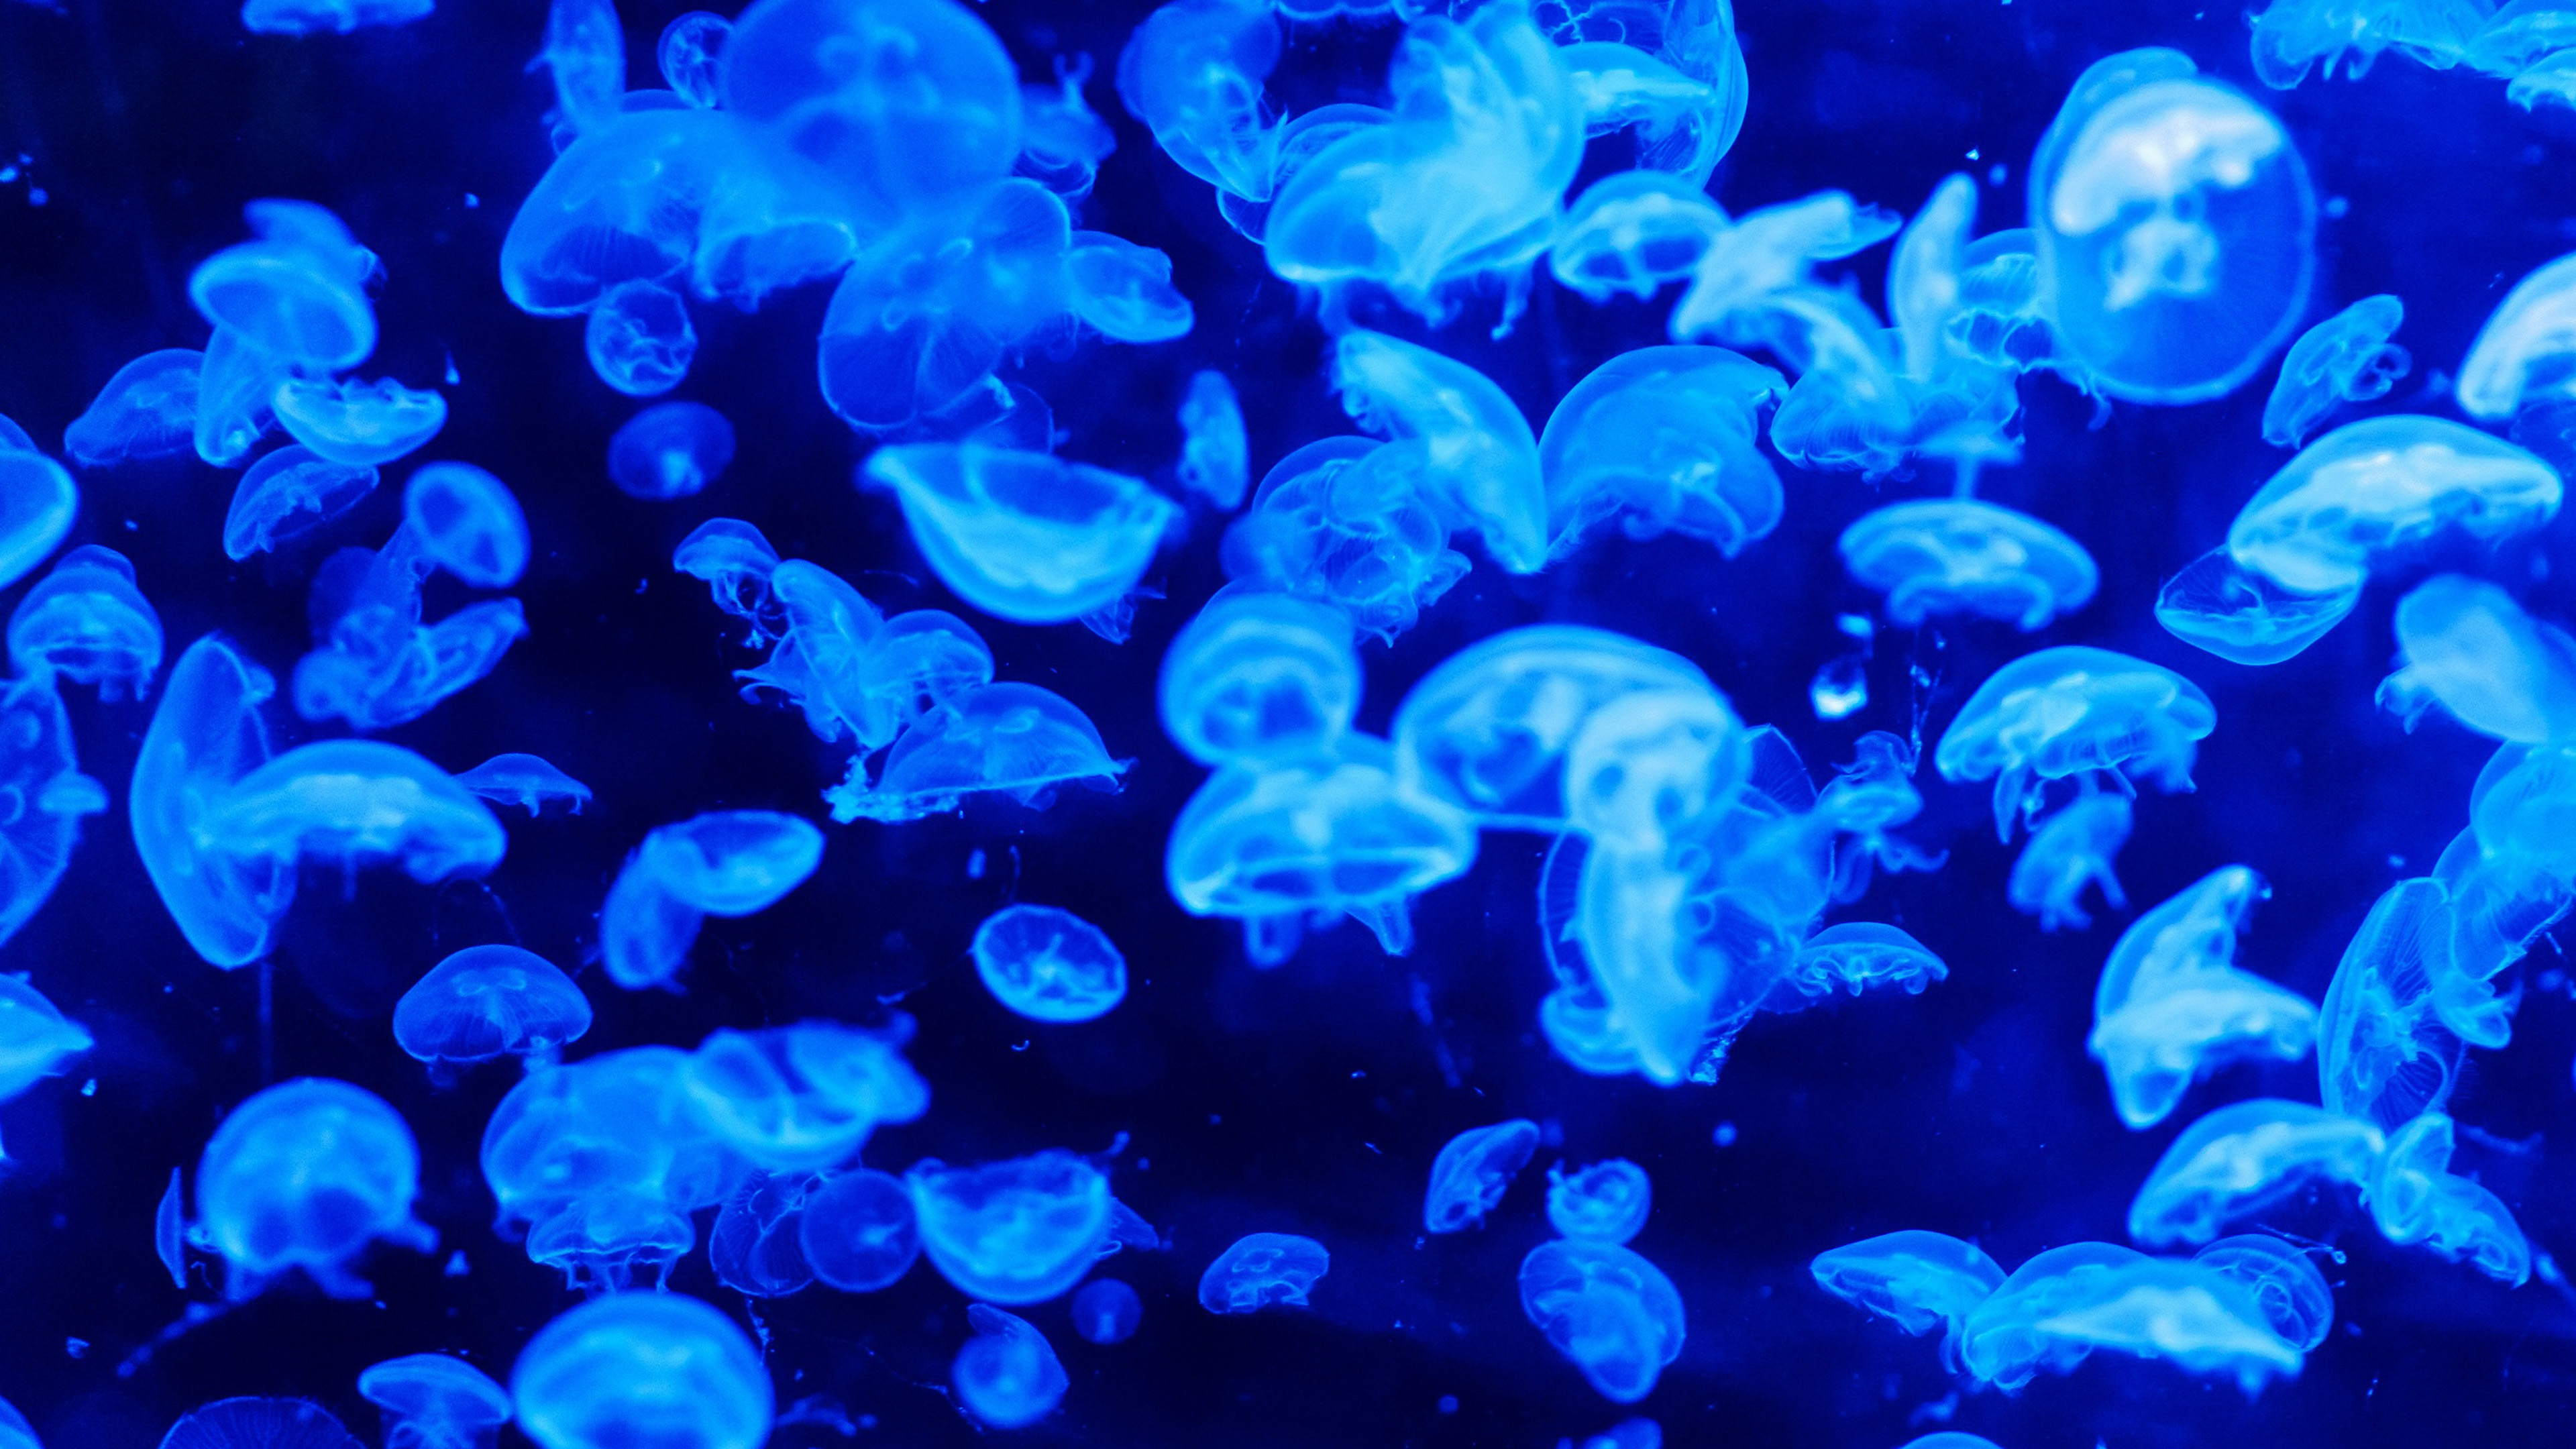 wallpaper for desktop, laptop. animal sea ocean blue jellyfish pattern